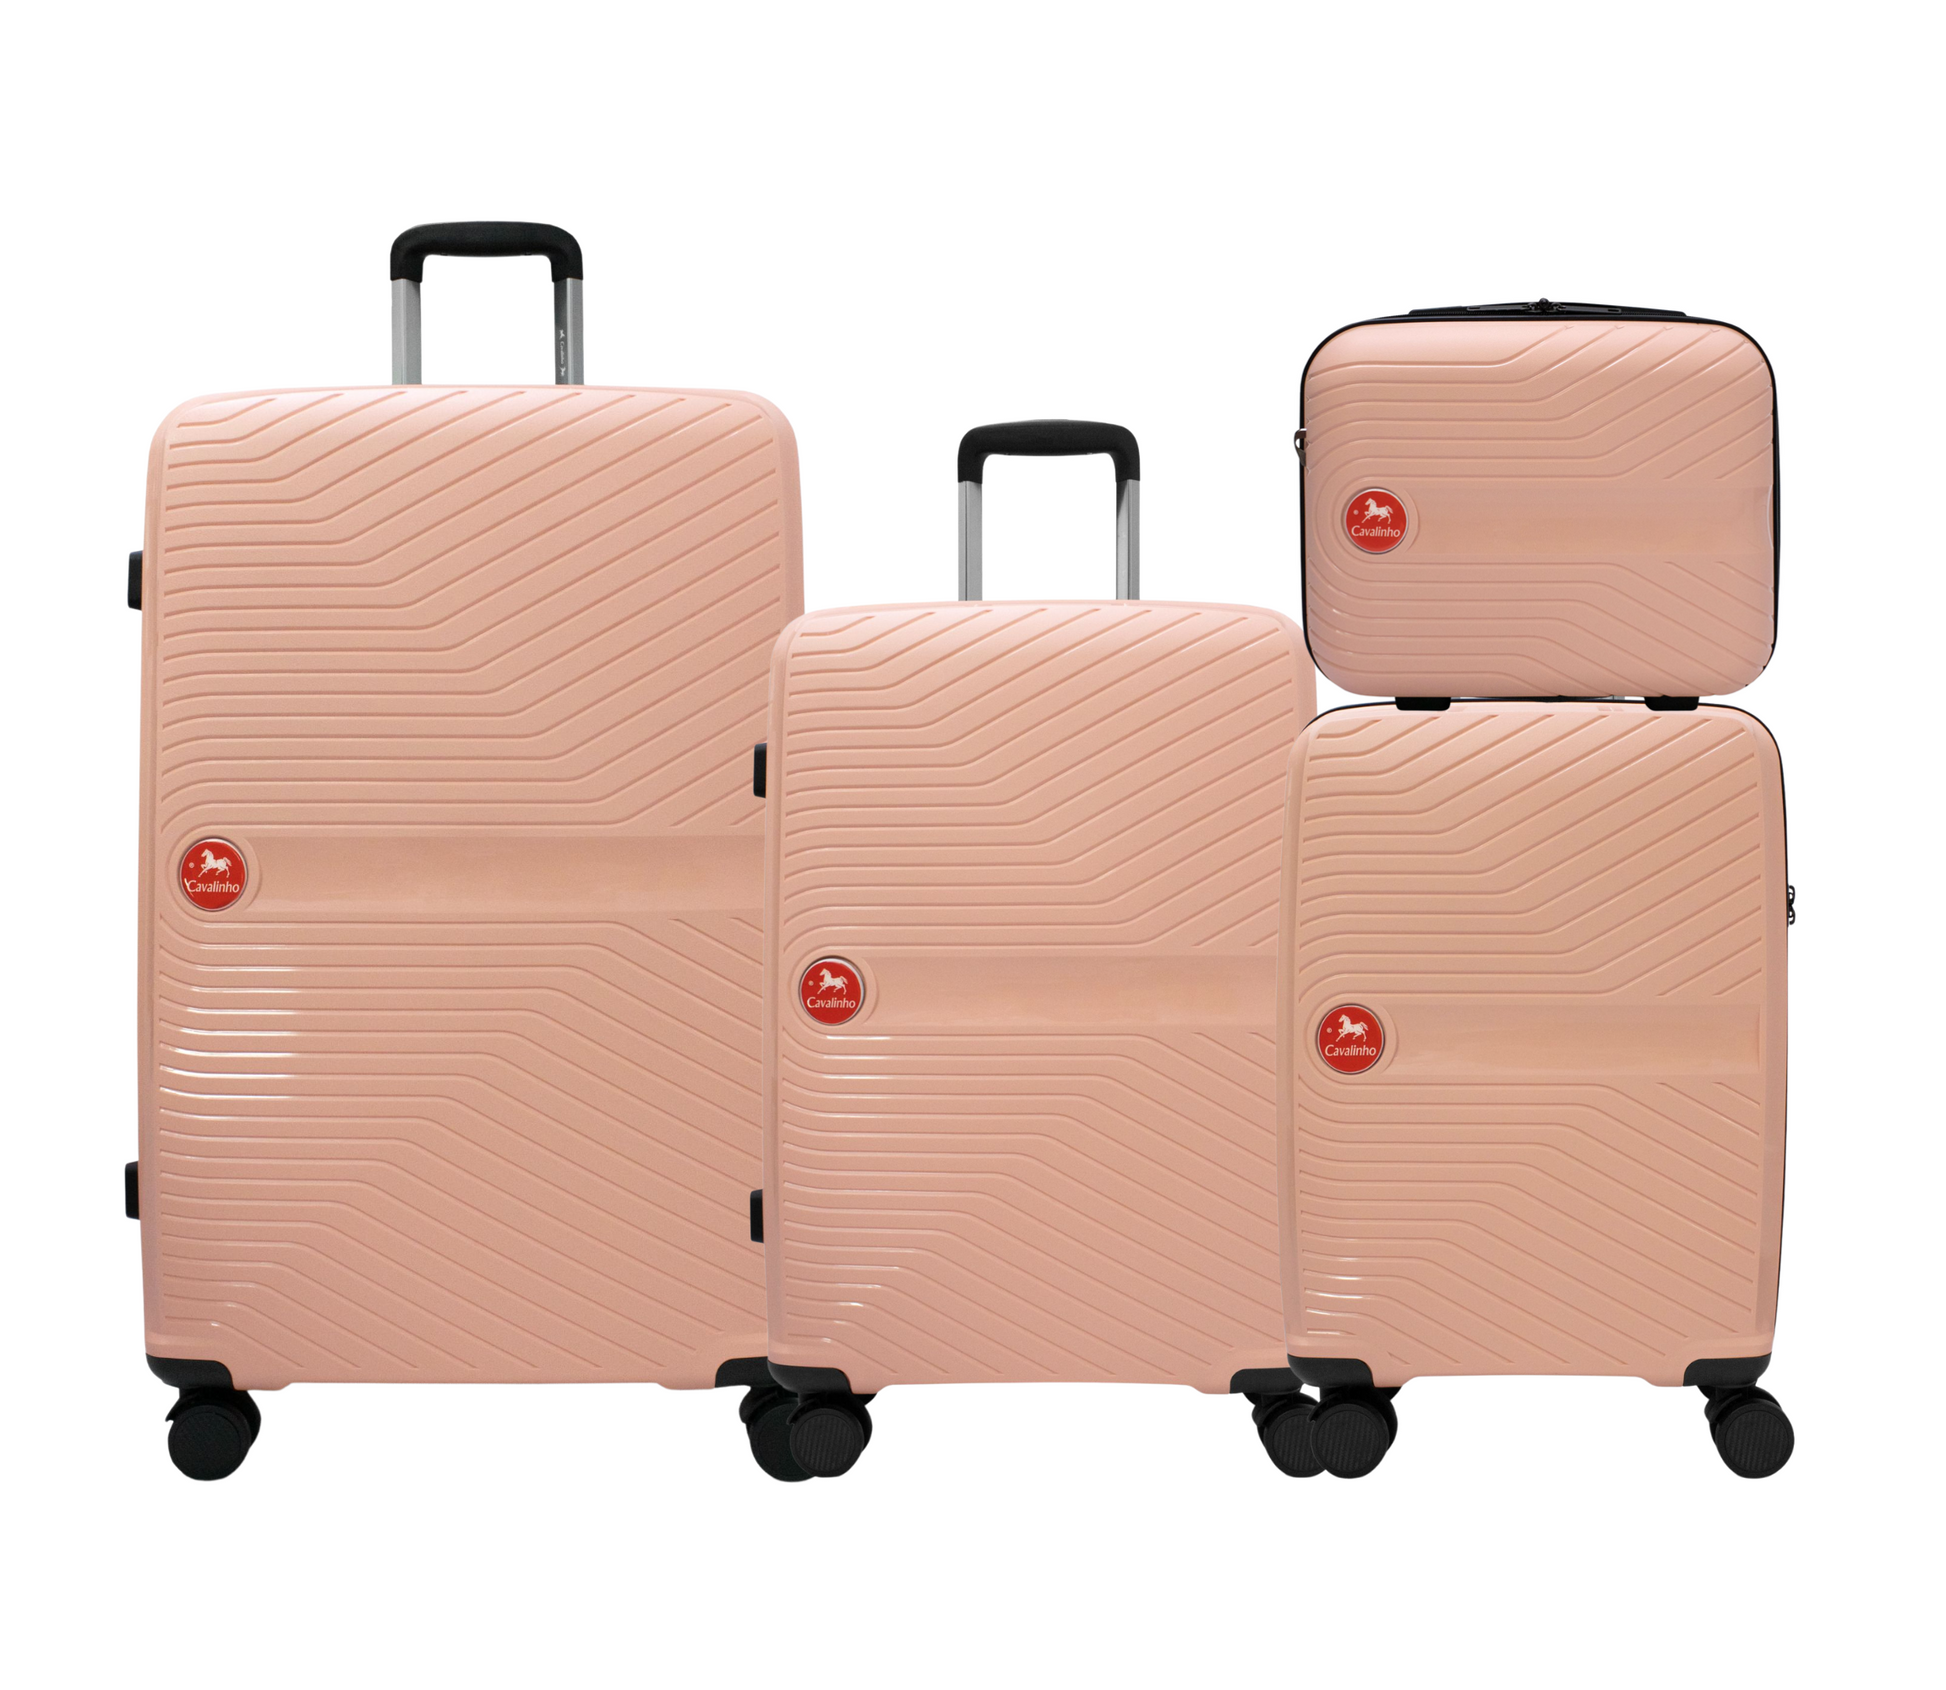 #color_ Salmon | Cavalinho Canada & USA 4 Piece Set of Colorful Hardside Luggage (15", 19", 24", 28") - Salmon - 68020004.11.S4_1